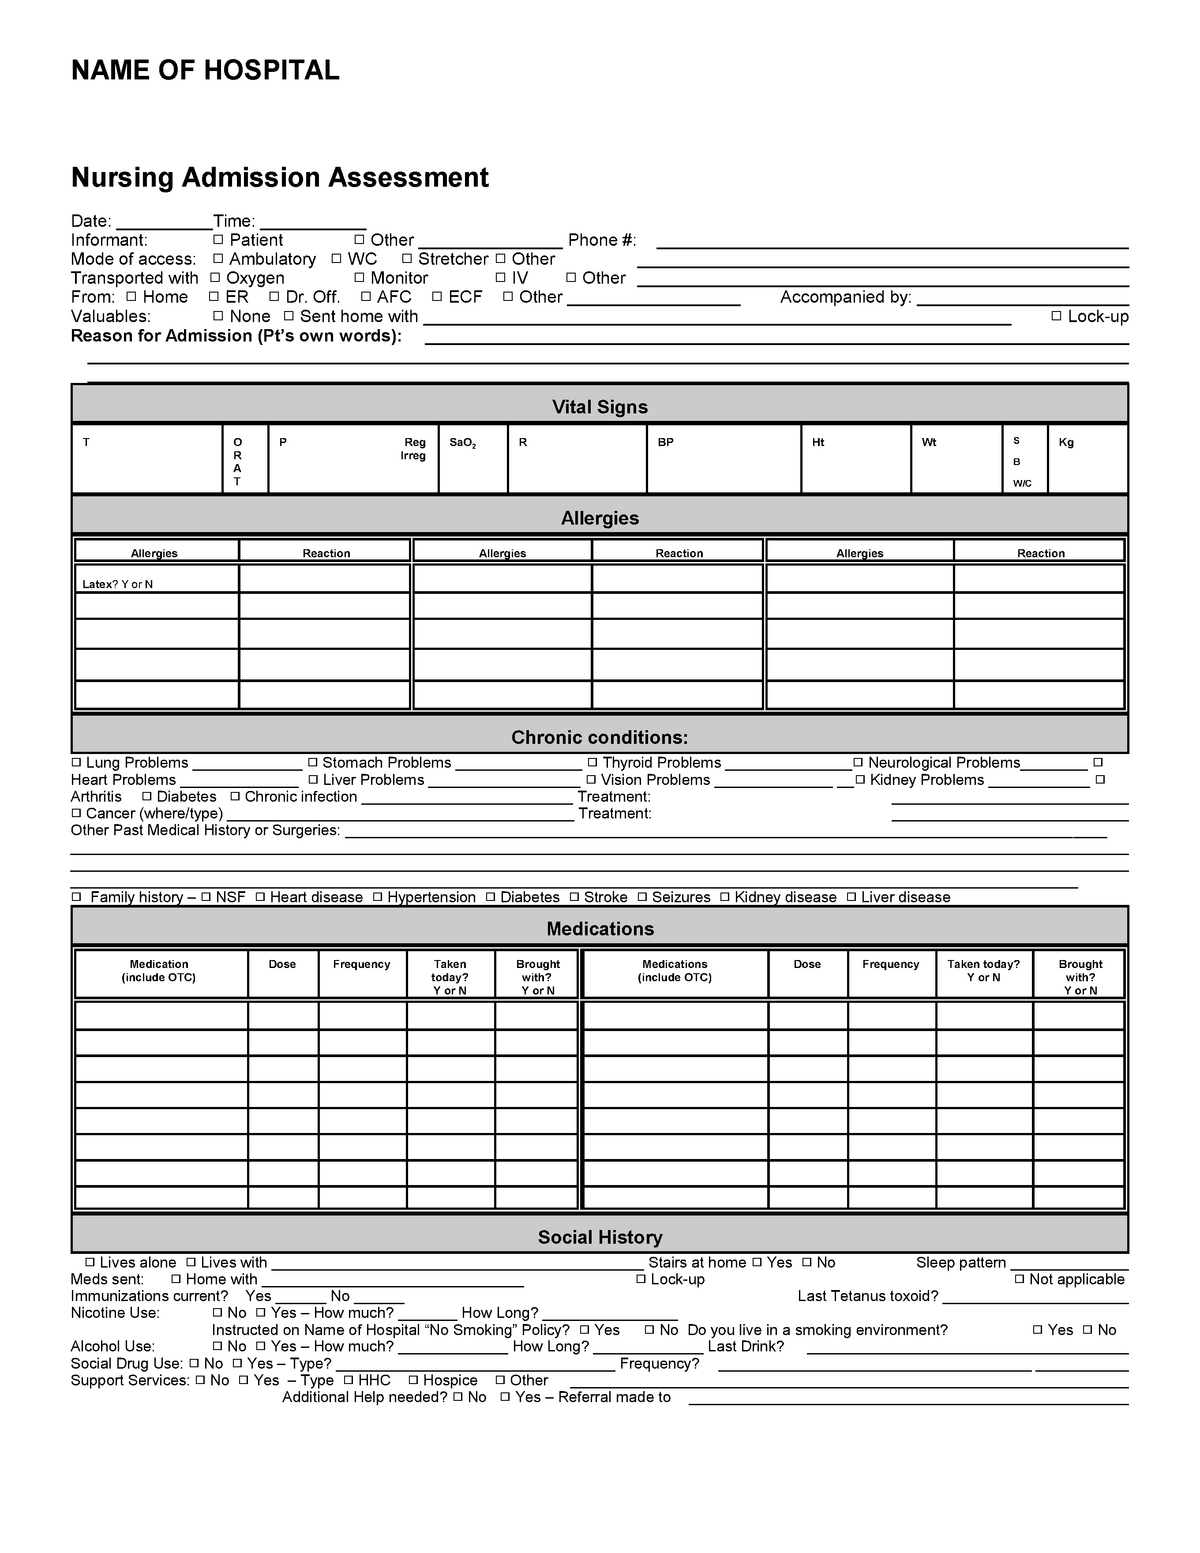 Admission Assessment Form Name Of Hospital Nursing Admission Assessment Date Time 7245